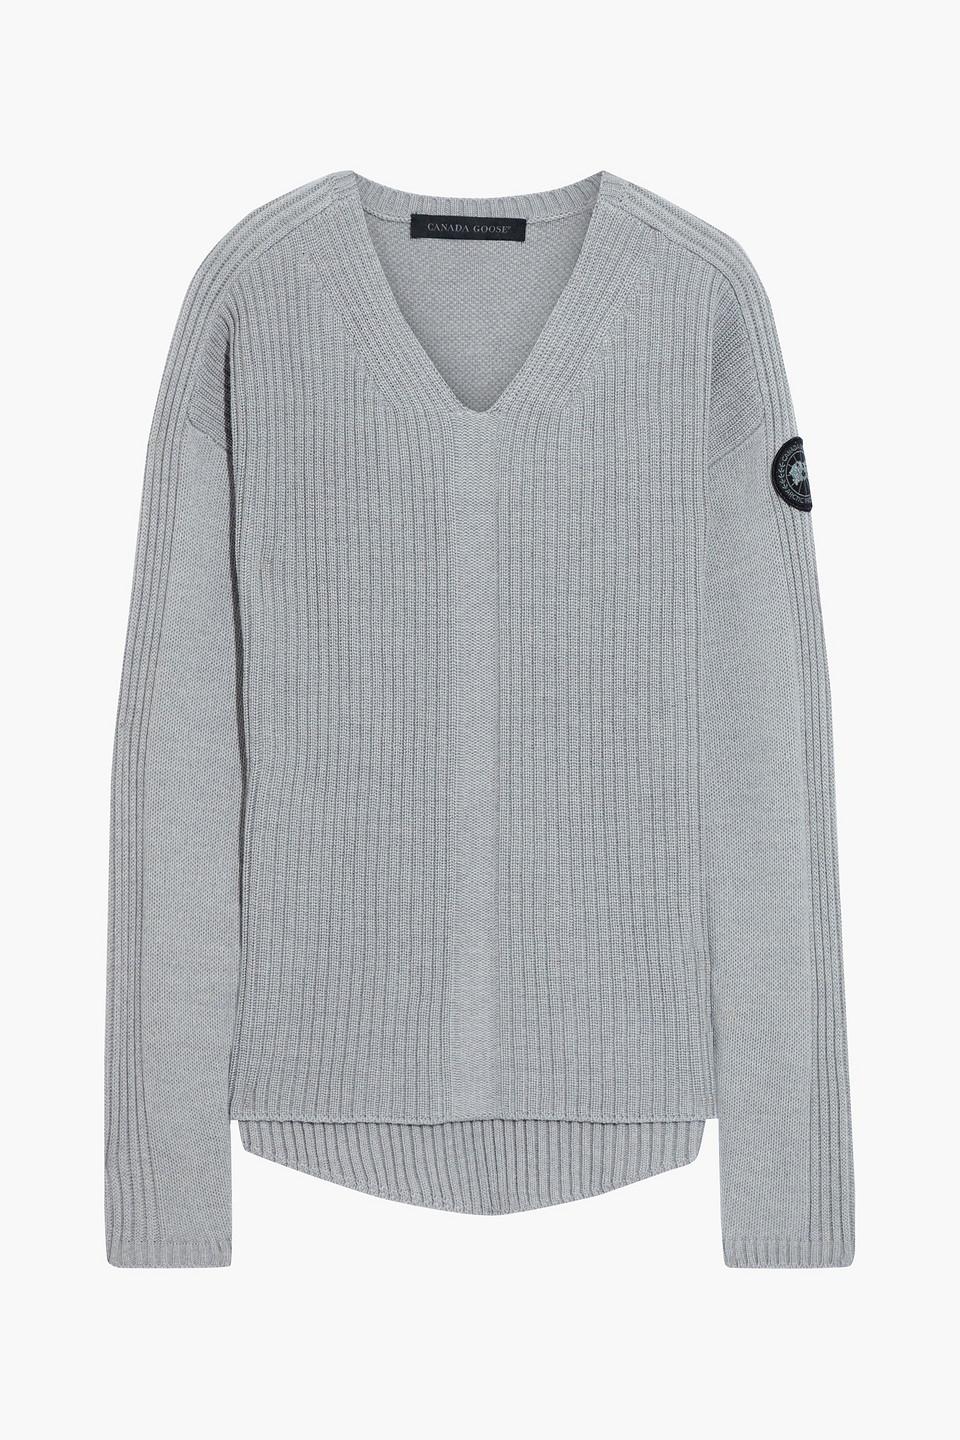 Canada Goose Kimberly Paneled Ribbed Merino Wool Sweater in Gray | Lyst